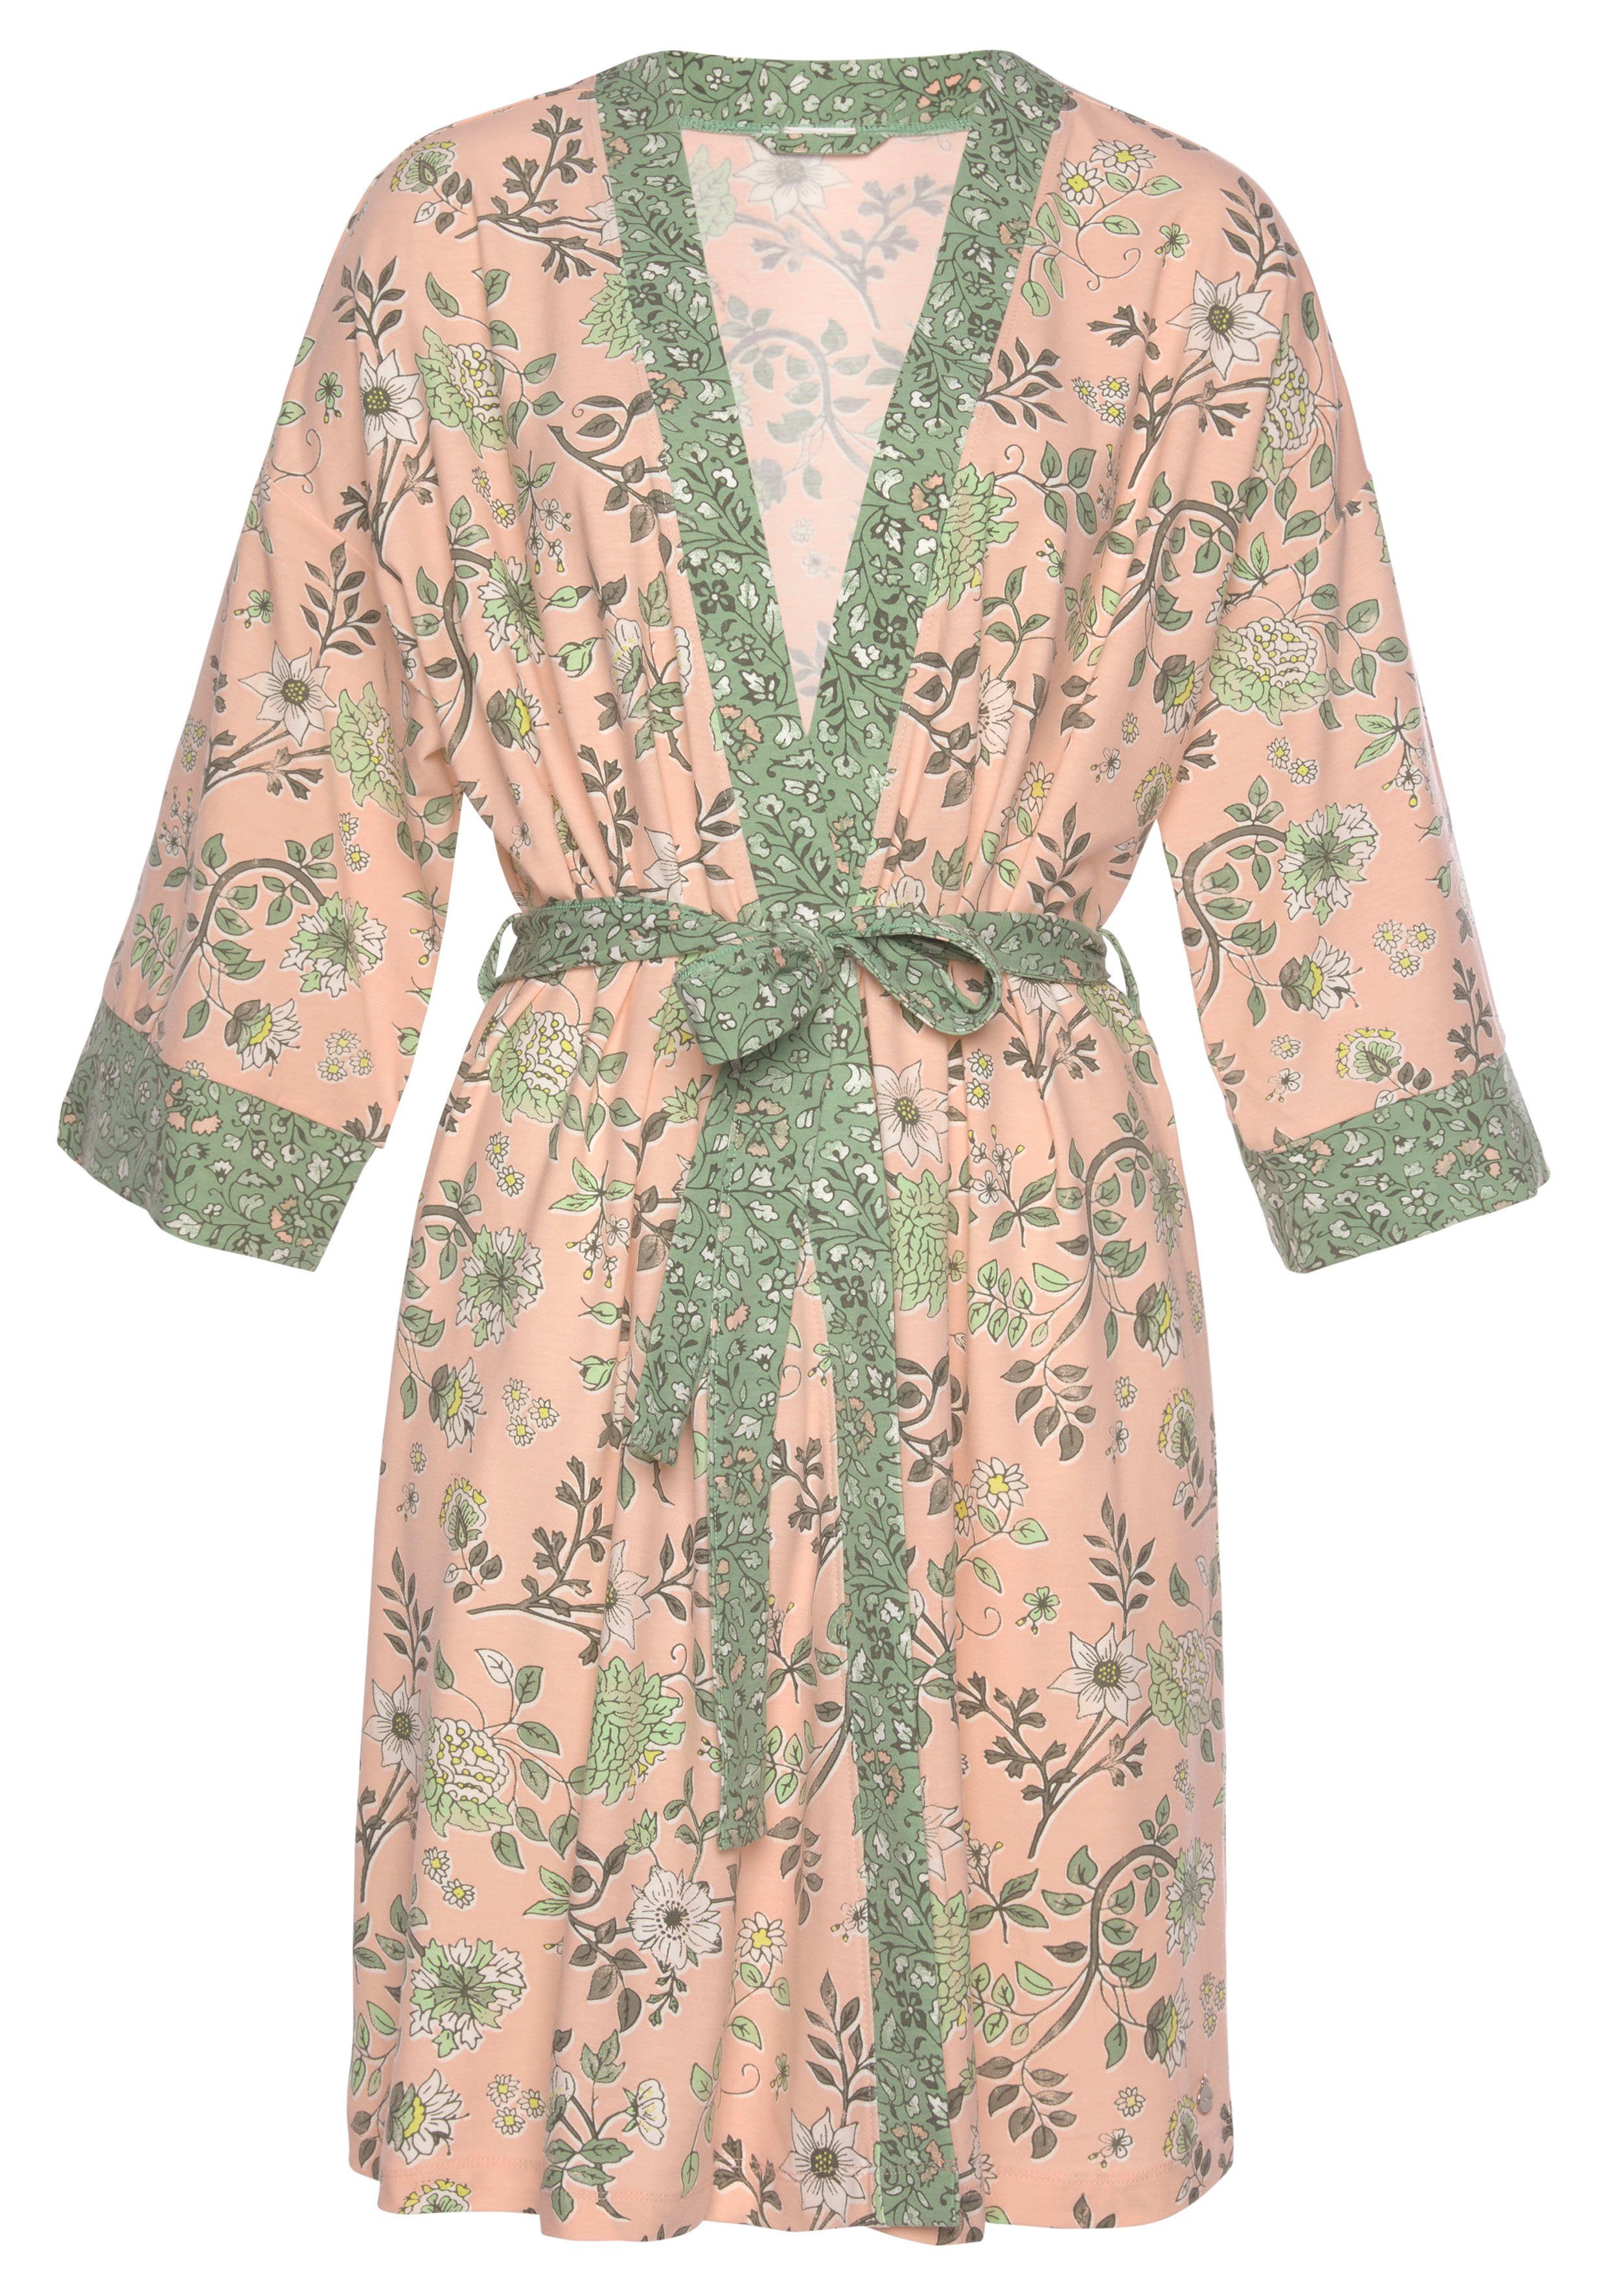 LASCANA nude-schilfgrün Kurzform, Jersey, Kimono, Gürtel, mit Allover-Druck Kimono-Kragen, Blumen